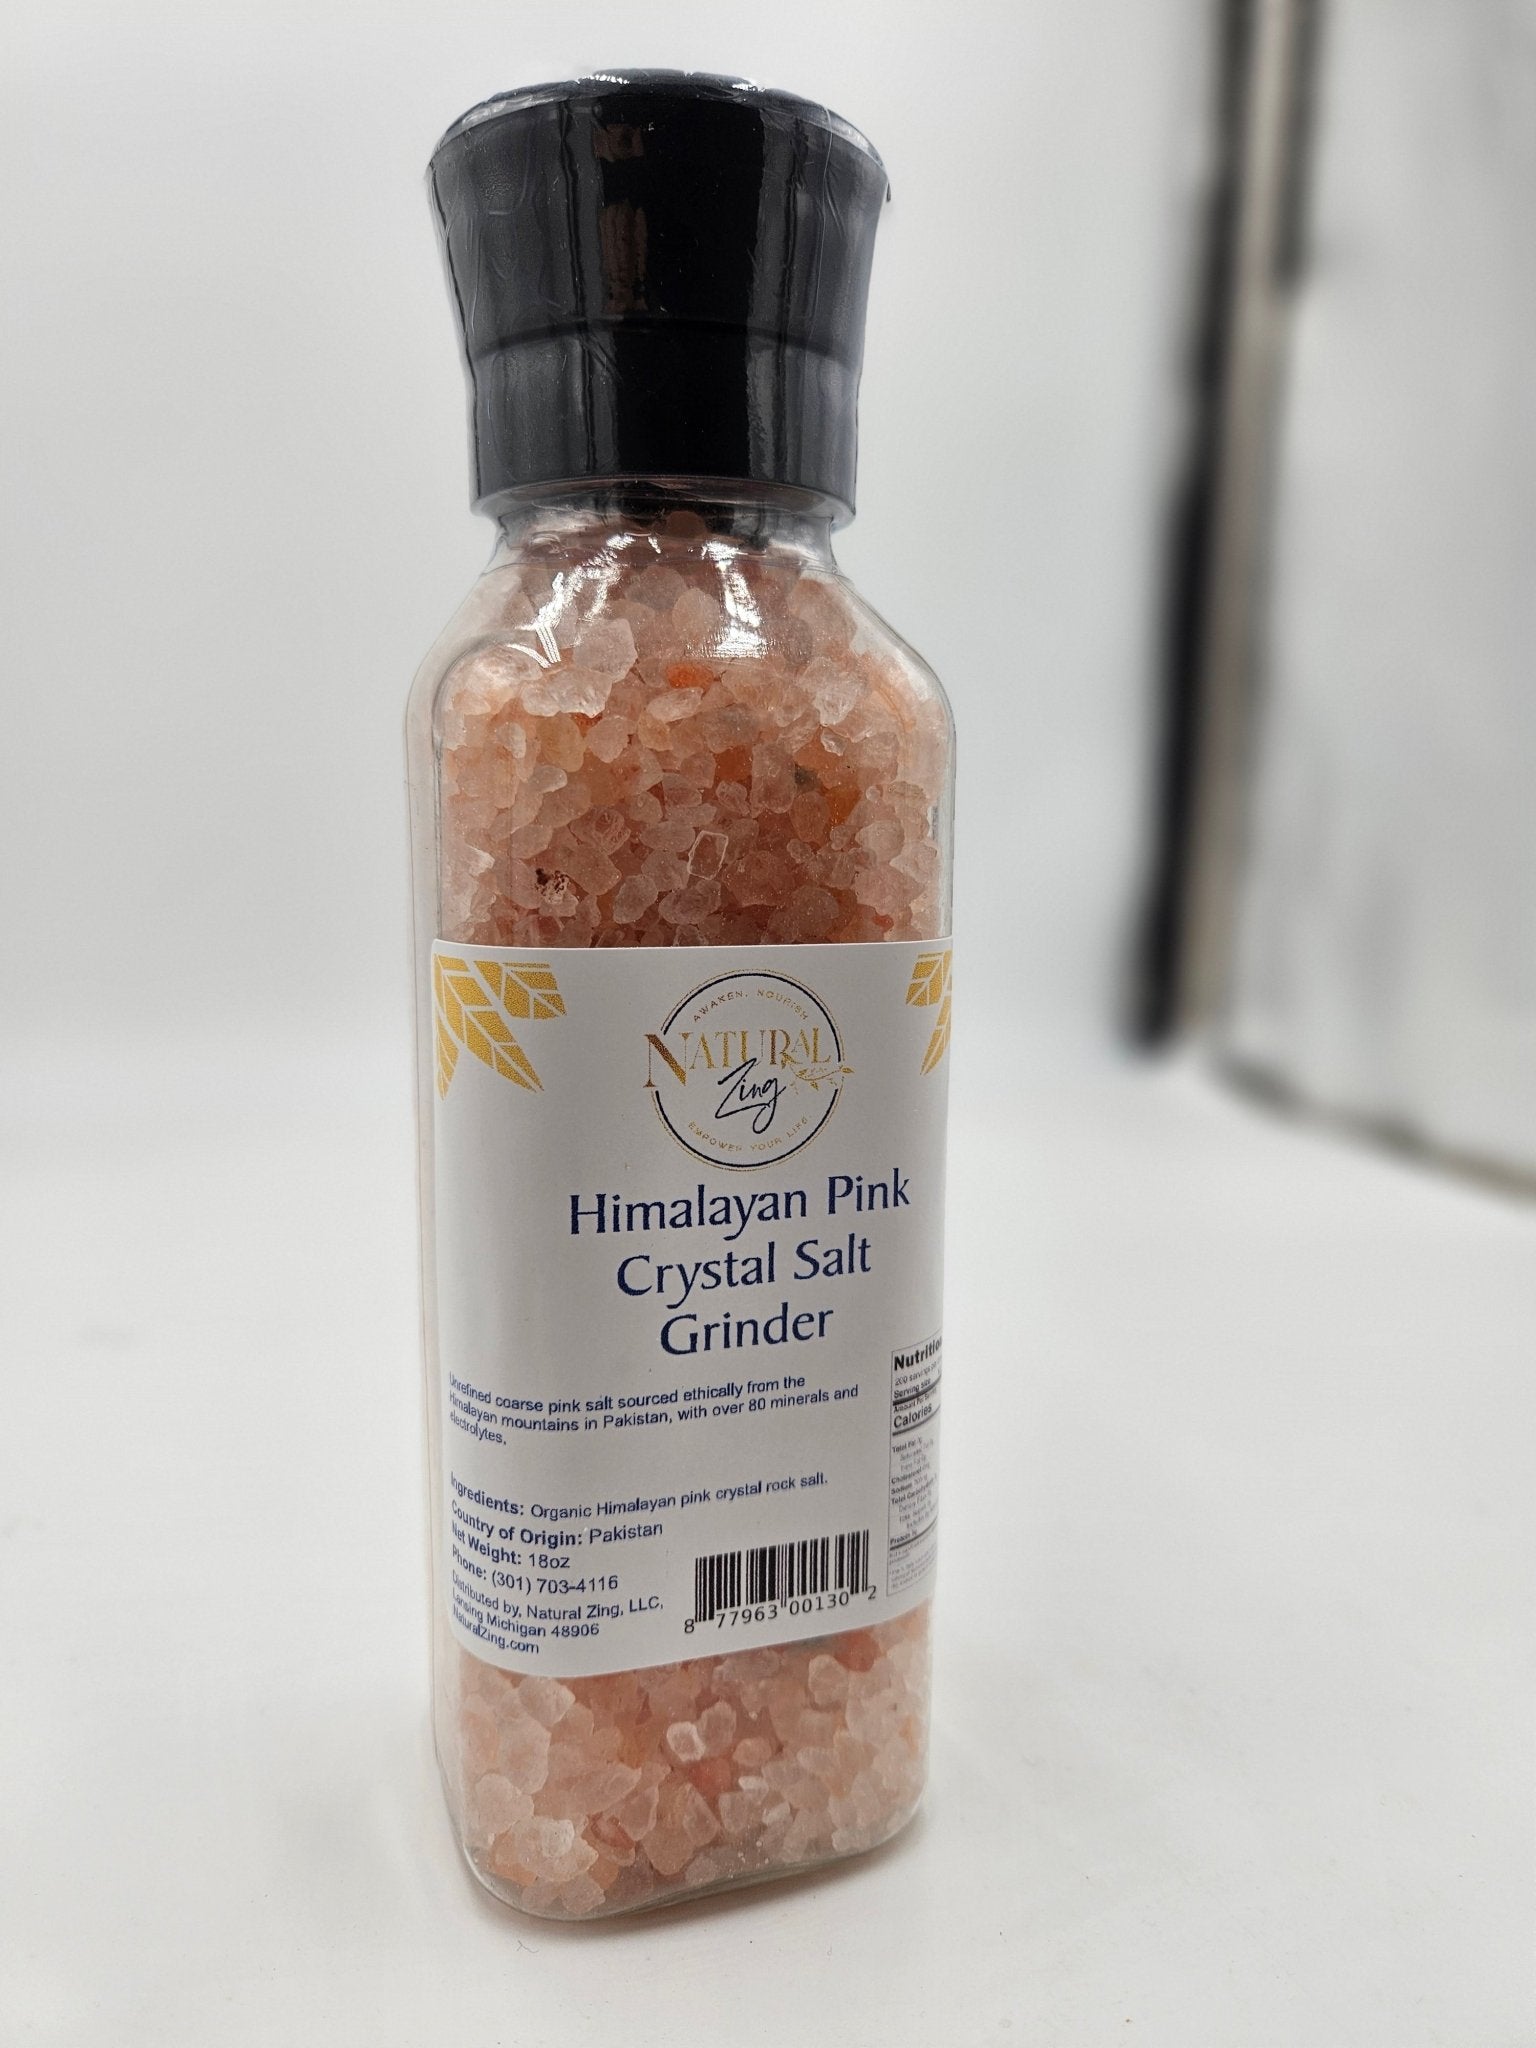 Himalayan Pink Crystal Salt (coarse) 18 oz Grinder Jar